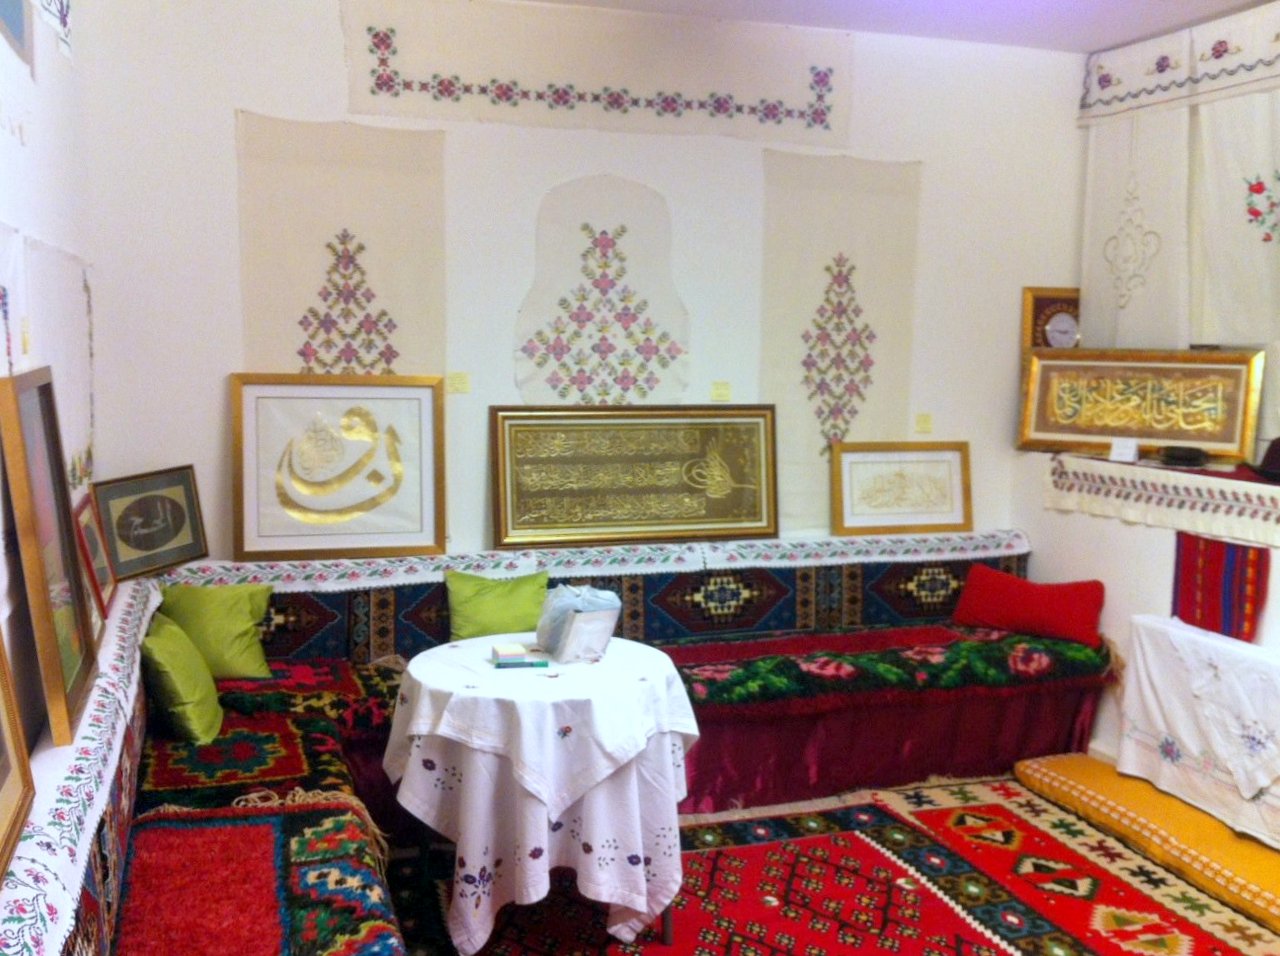 radovi-izlozeni-u-bosanskoj-sobi-privukli-ljubitelje-islamske-kaligrafije-3